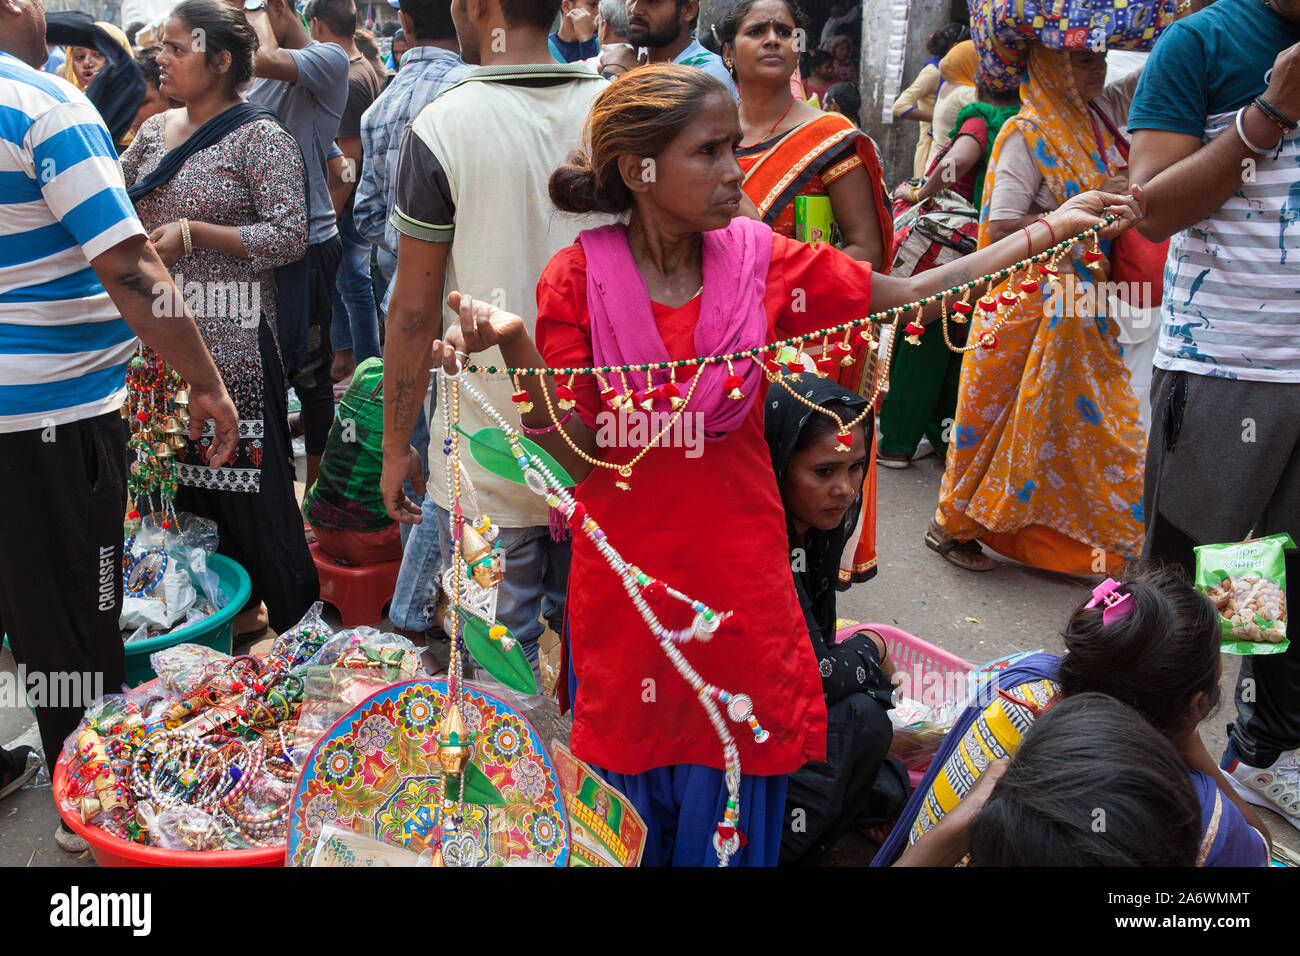 A vendor selling Diwali decorations in the Sadar Bazar district of Delhi Stock Photo